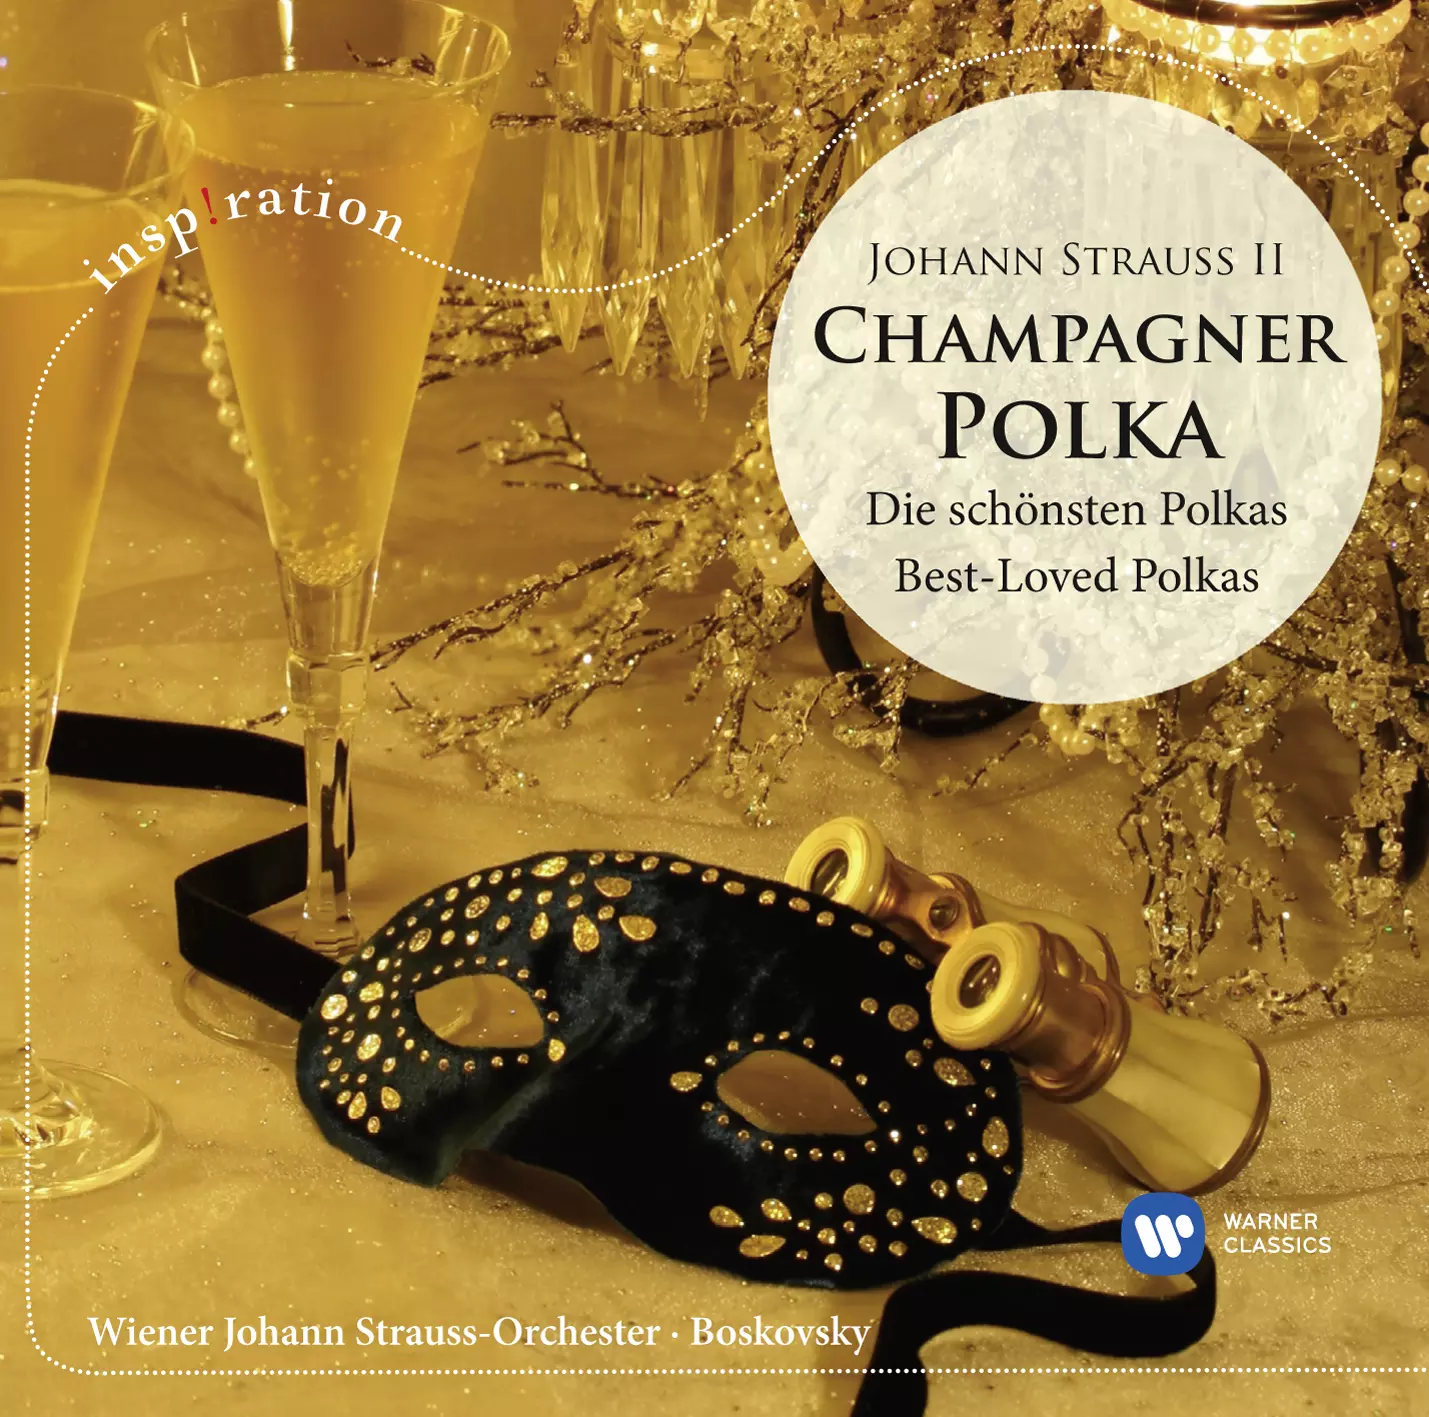 Strauss II: Champagne Polka - Best Loved Polkas